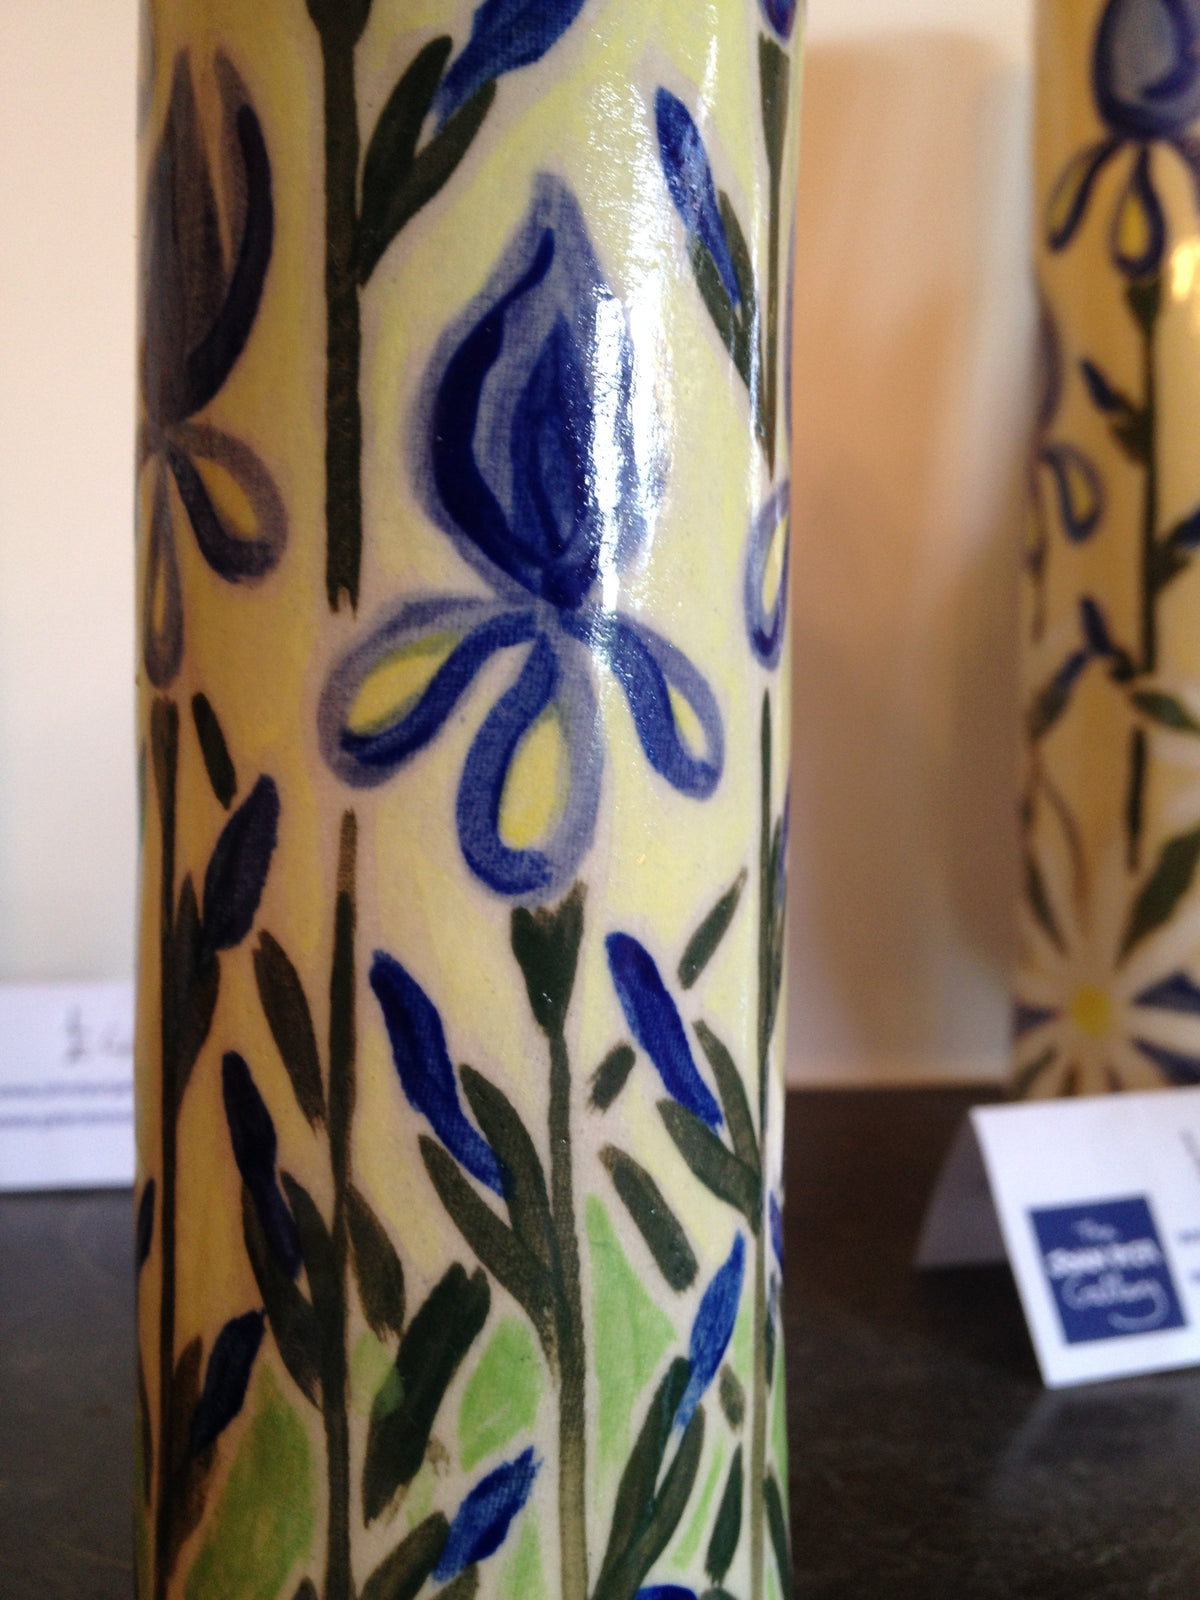 Cornish Ceramic Vase with Blue Iris by Joanne Short